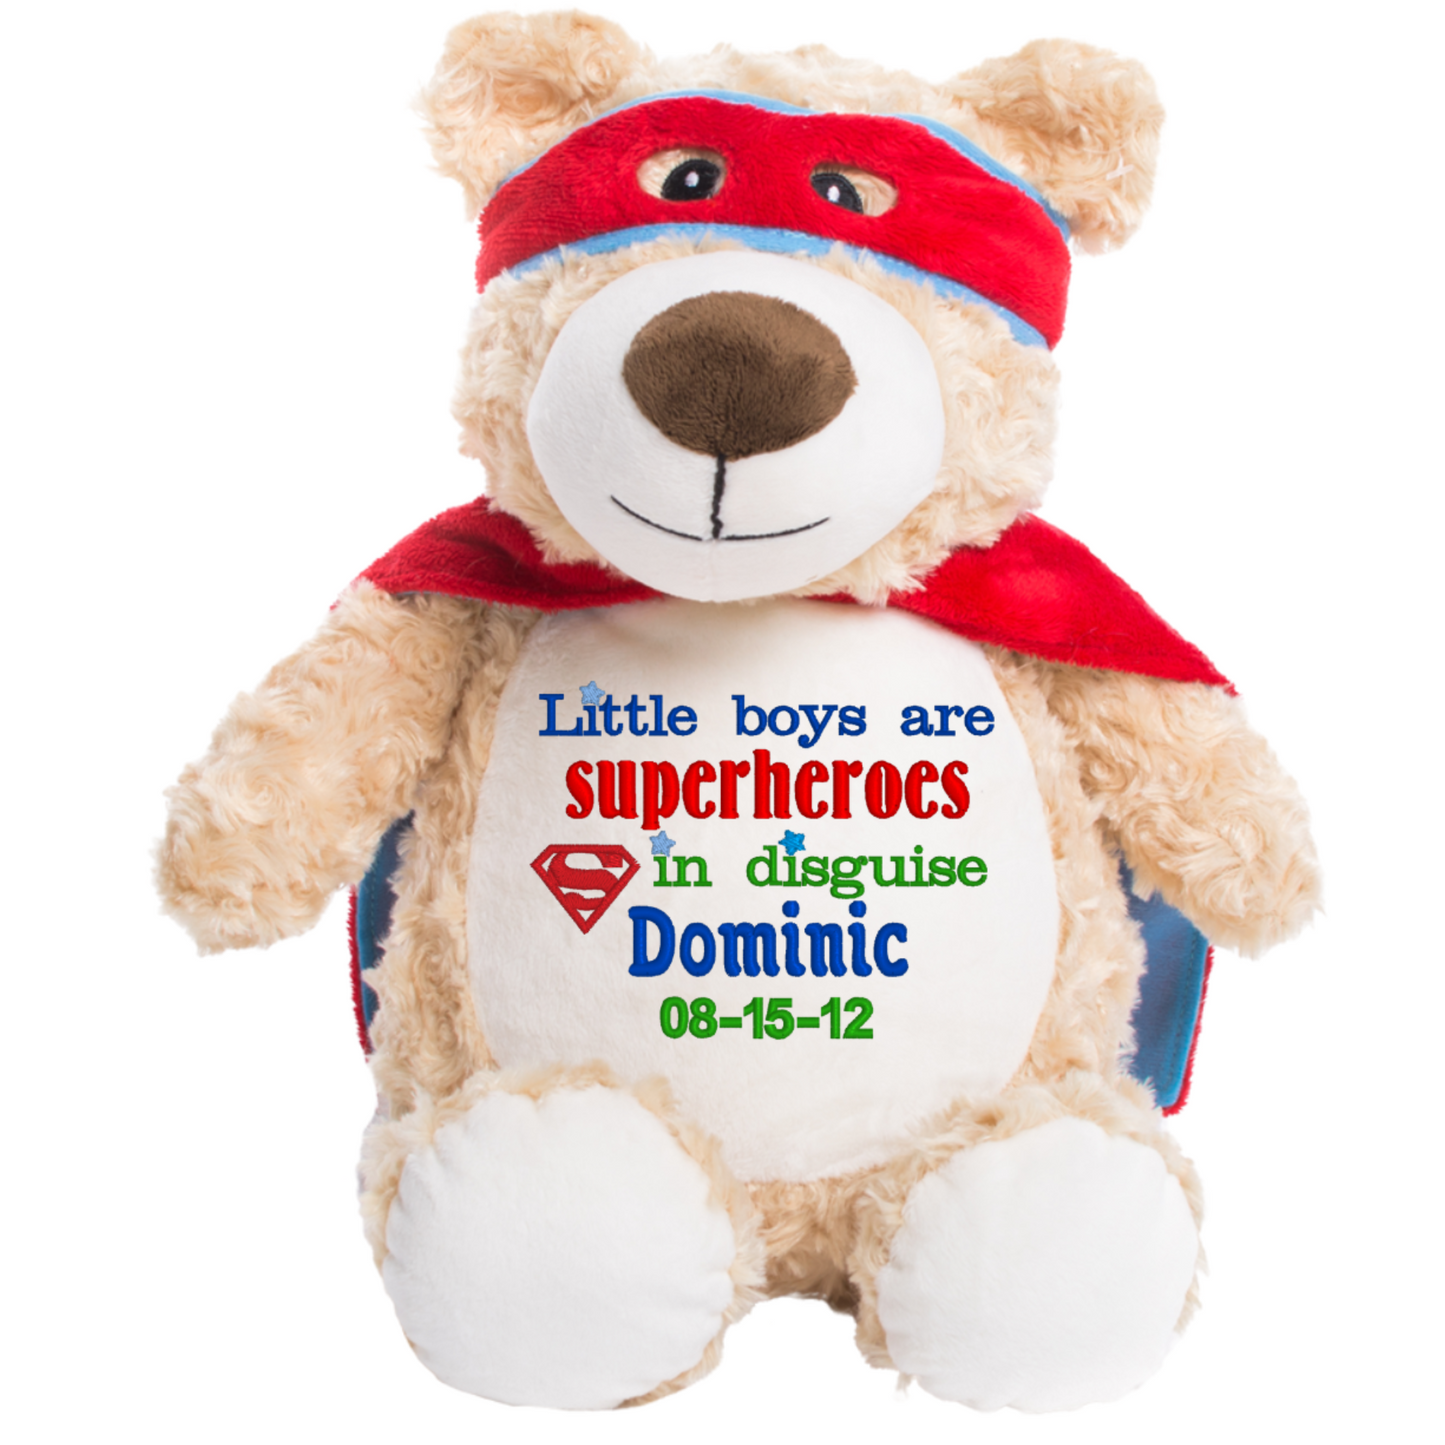 Superhero Bear stuffed animal personalized with Little boys are superhero's design, personalized plushie